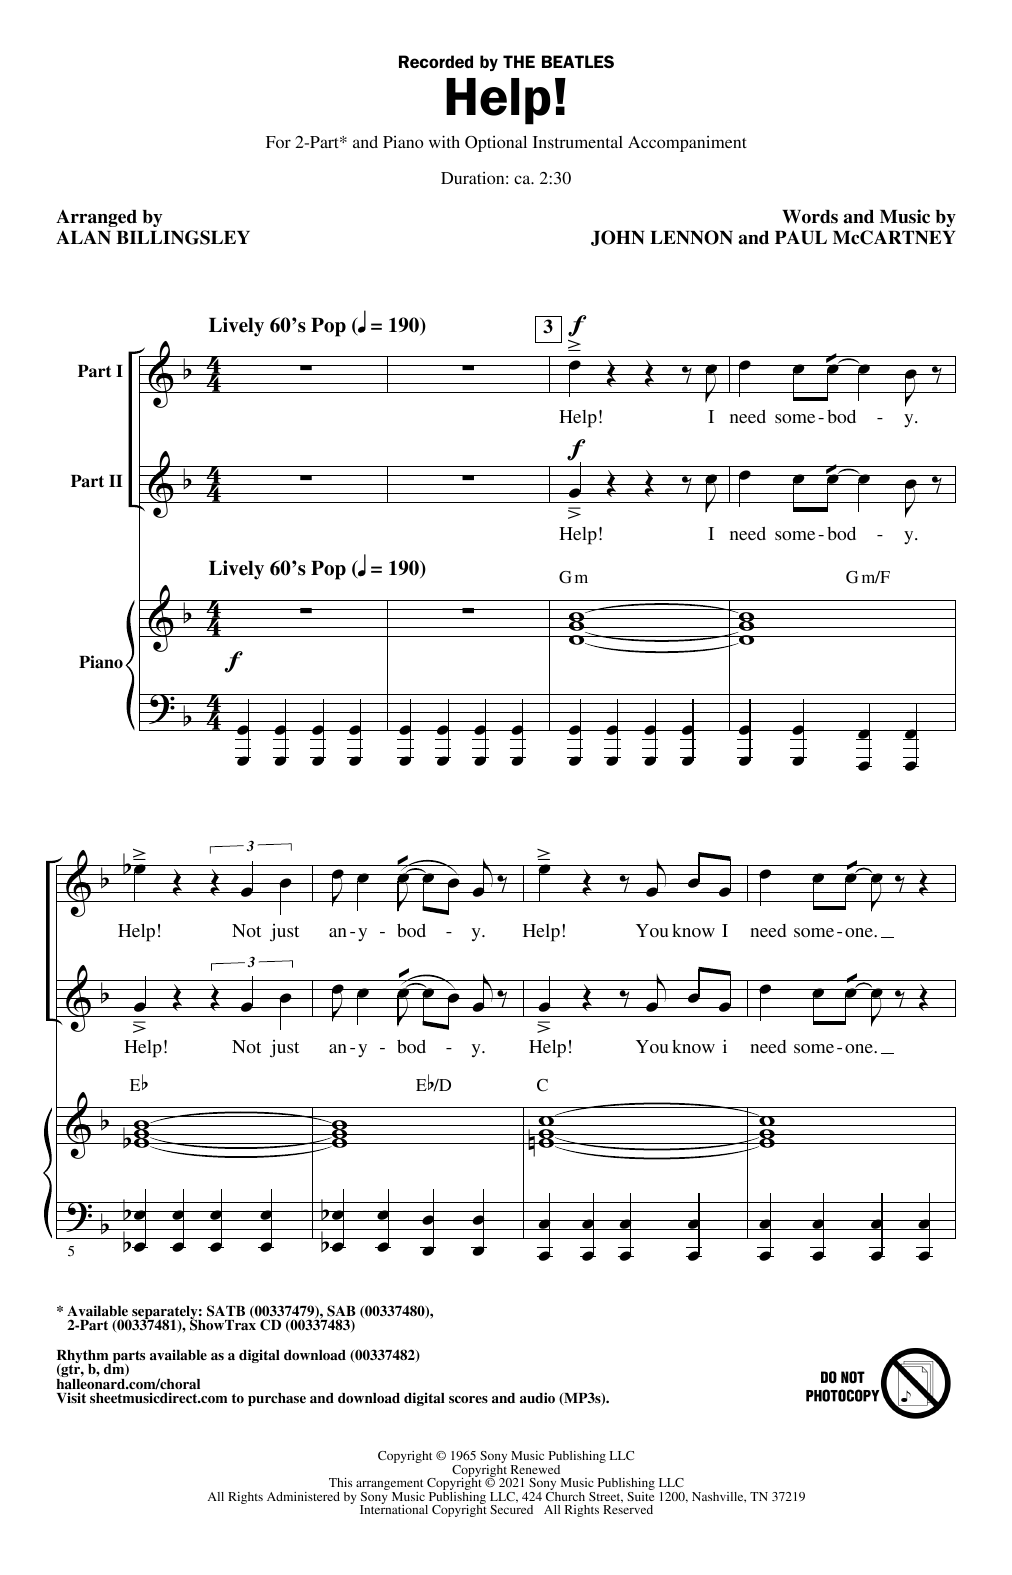 The Beatles Help! (arr. Alan Billingsley) Sheet Music Notes & Chords for SAB Choir - Download or Print PDF